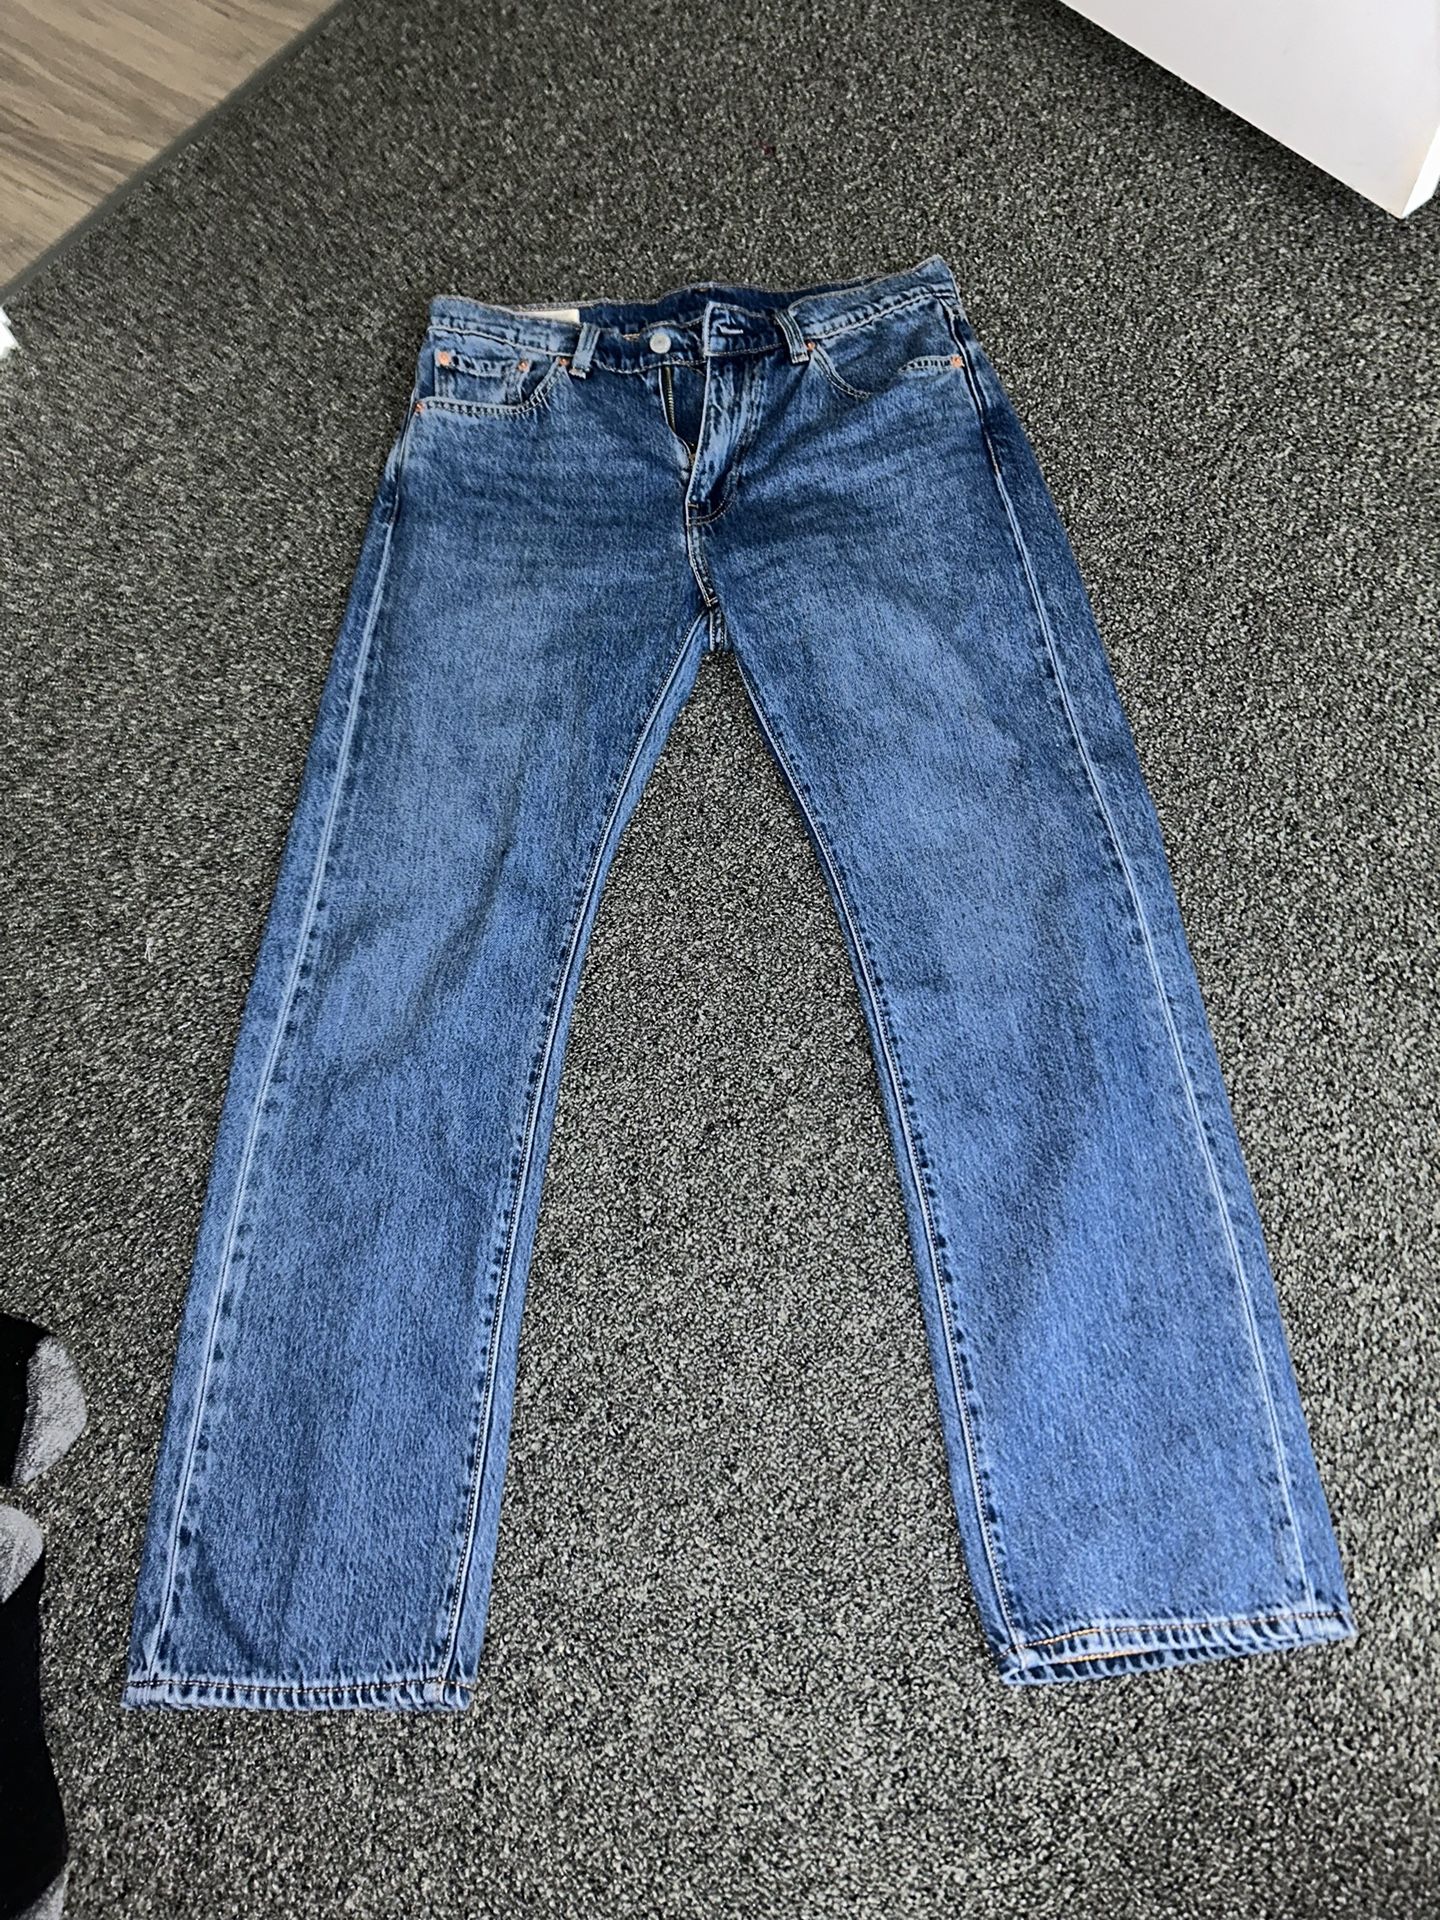 Mens 30W 30L Levi Jeans 